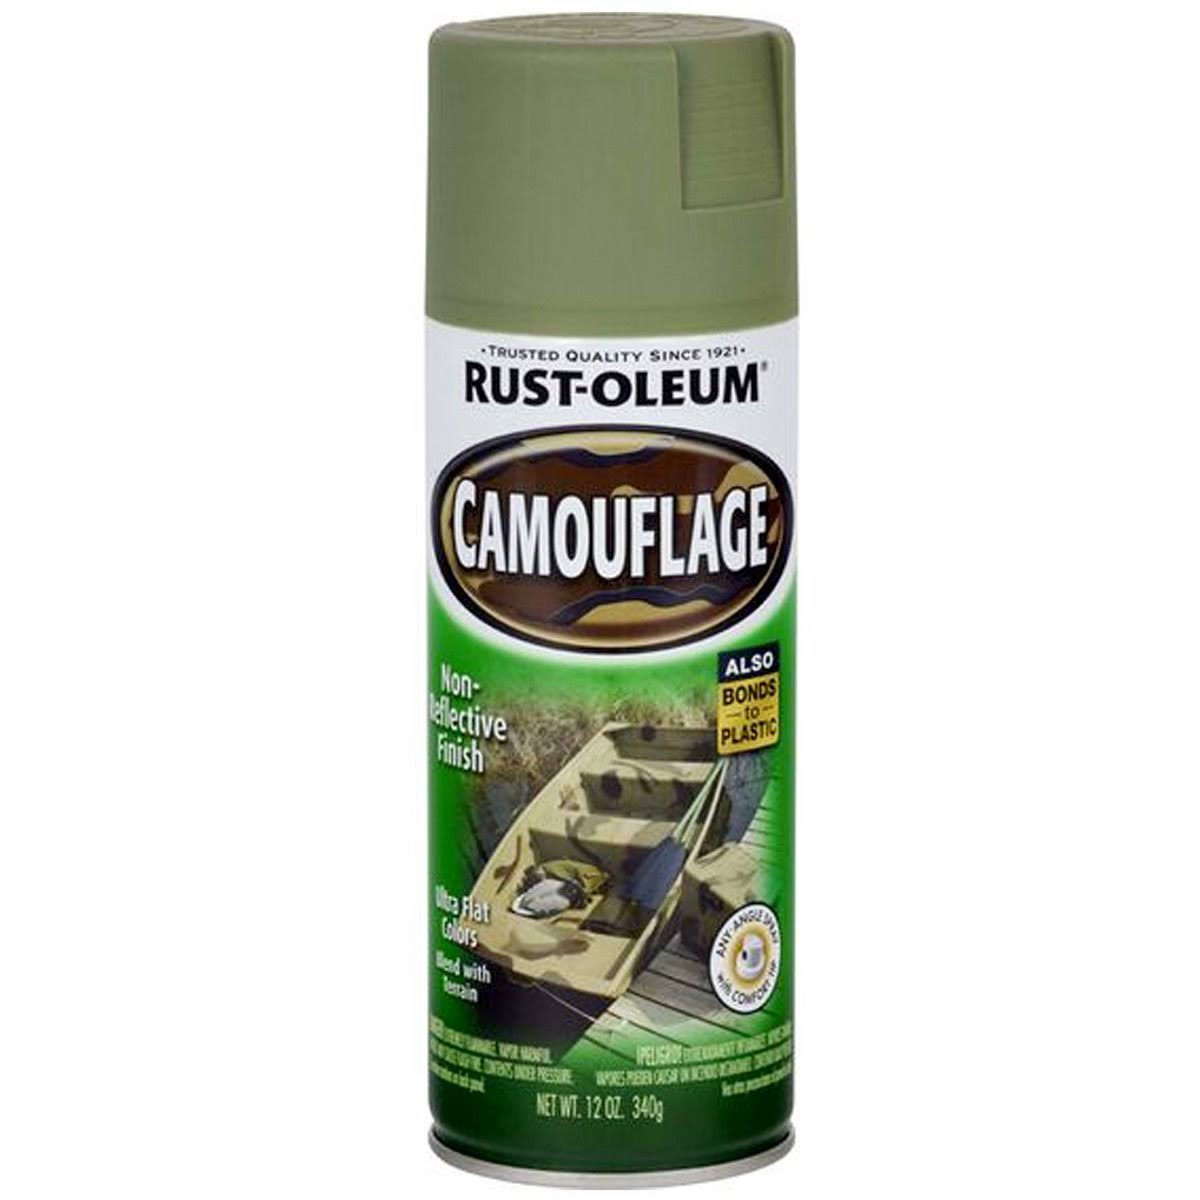 Rust-Oleum Camouflage Spray Paint - Army Green, 12oz